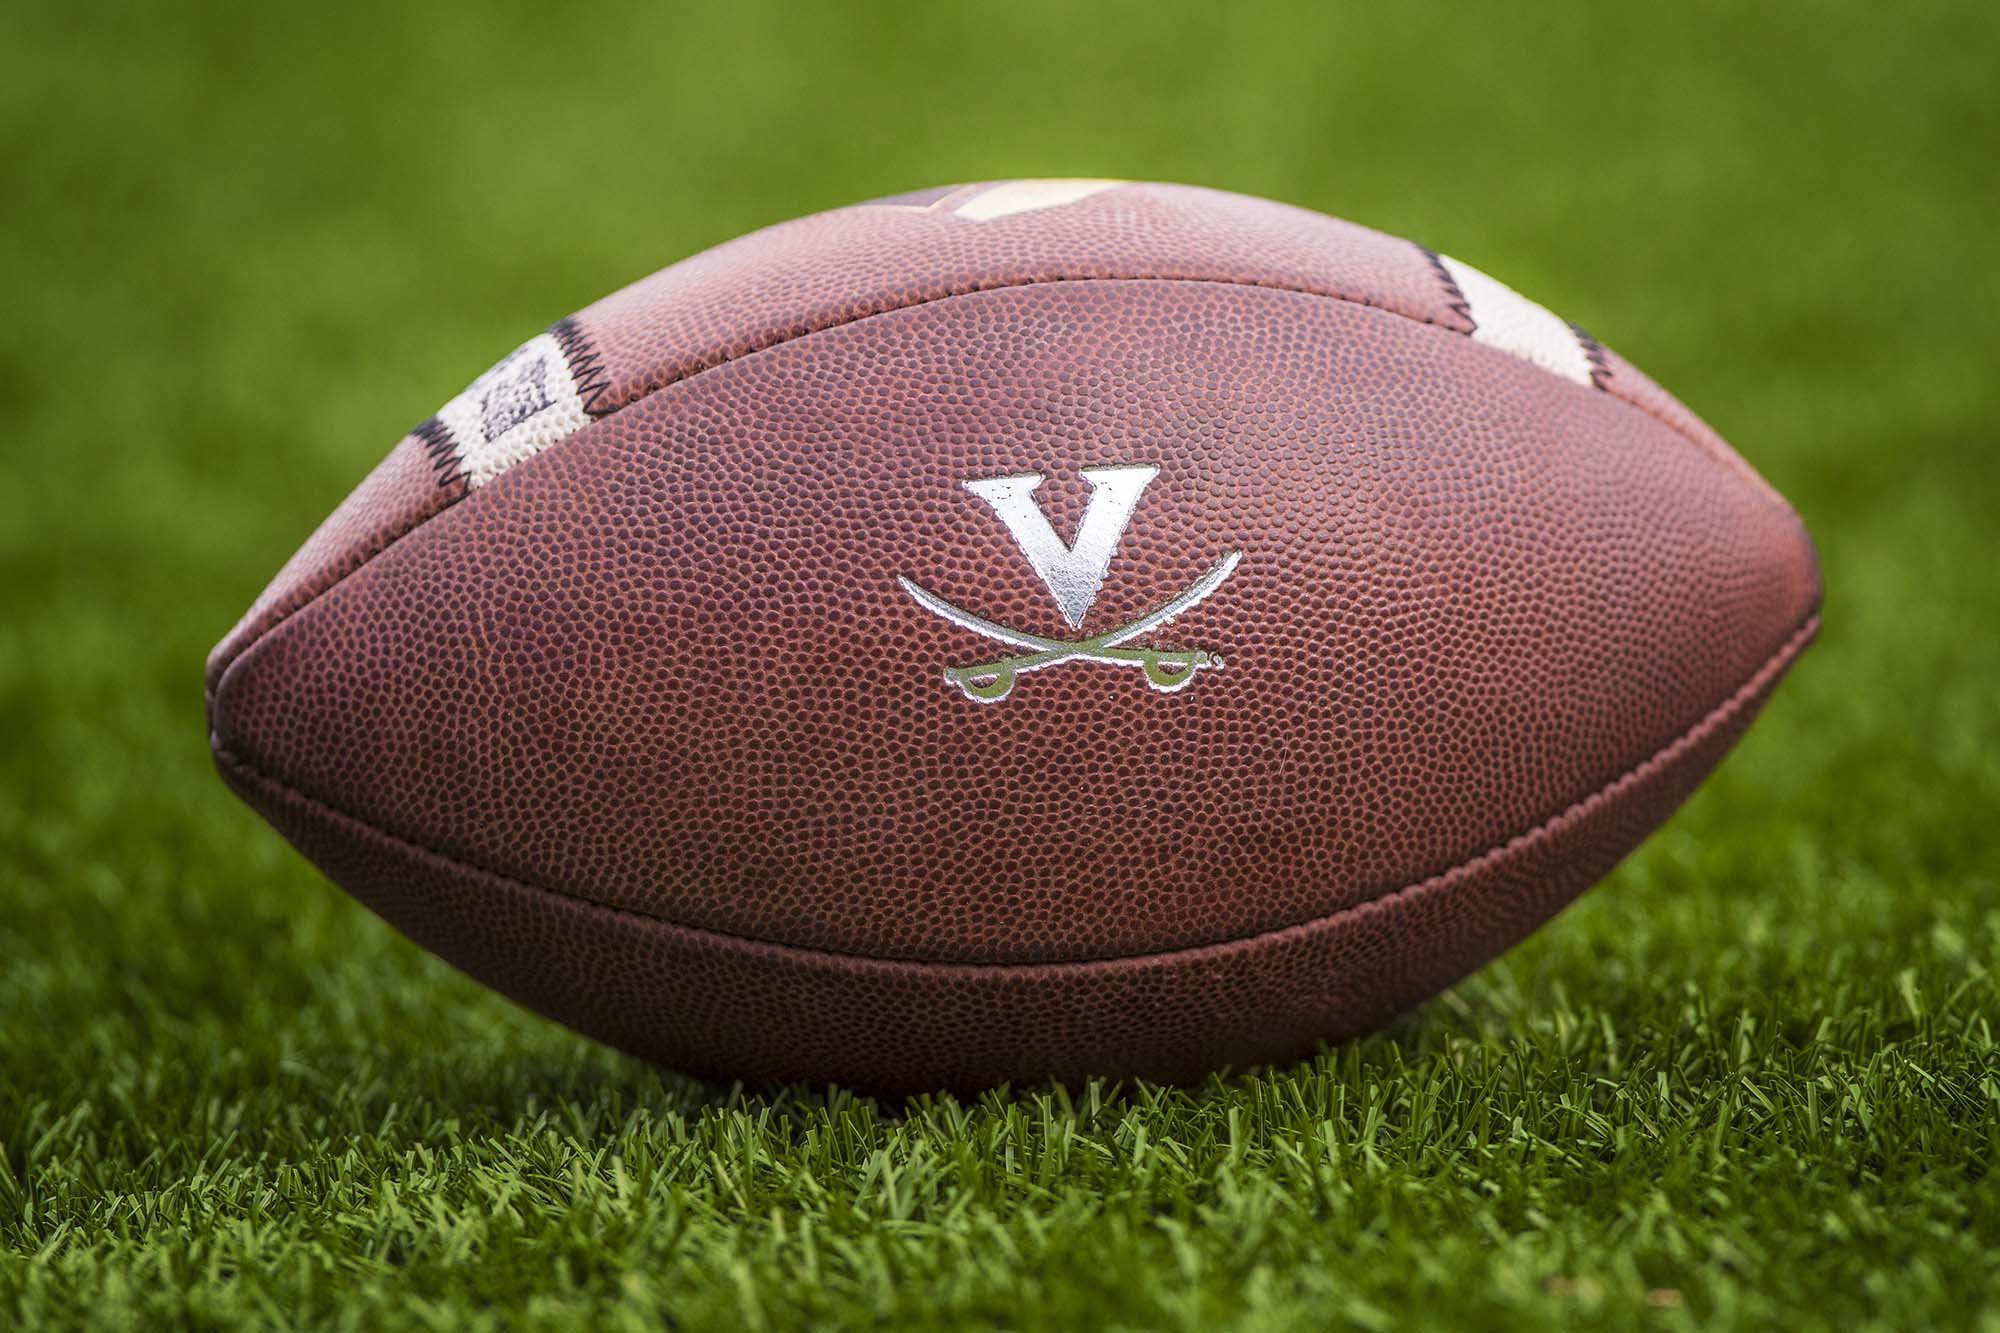 Football with UVA logo on grass